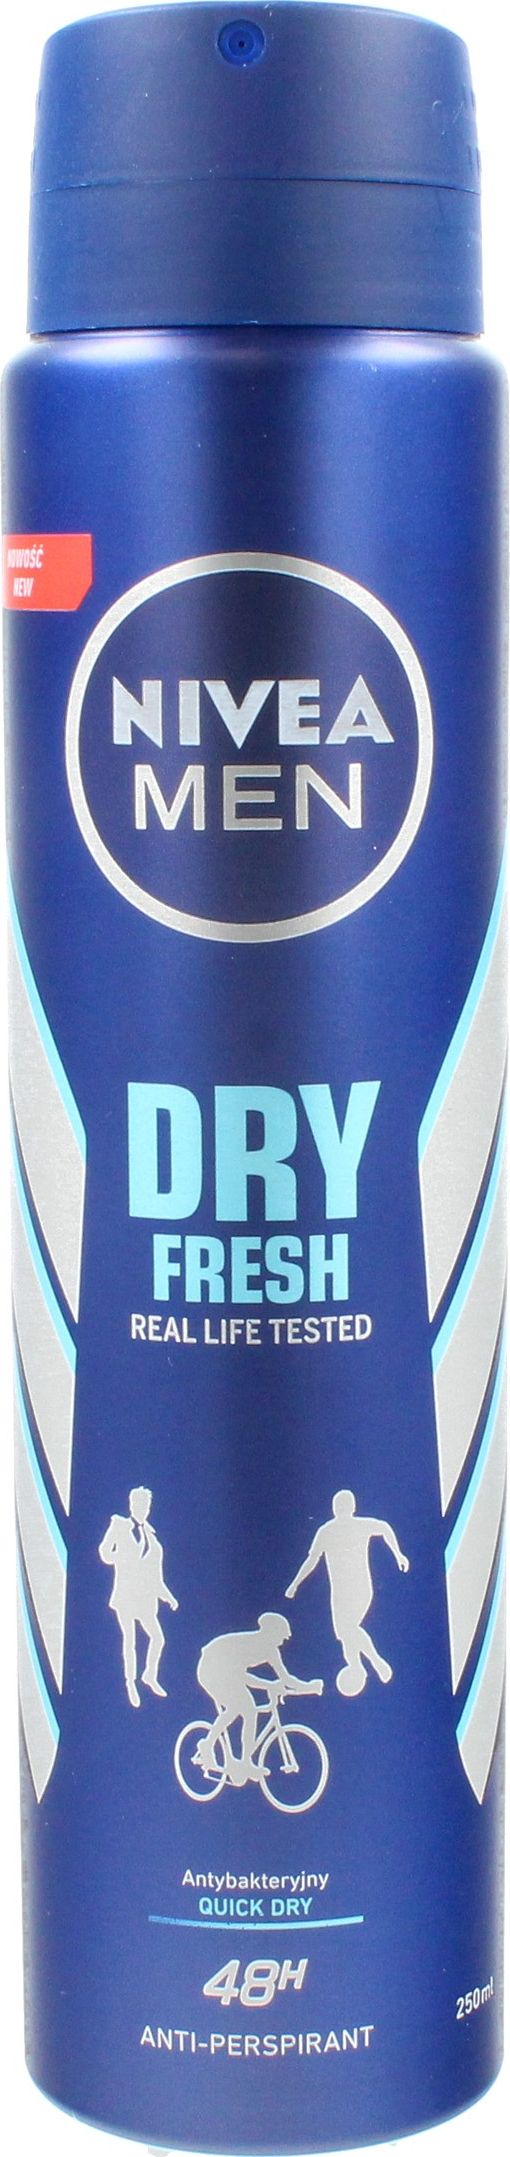 Nivea Nivea Dezodorant DRY FRESH spray meski 250ml 0185998 (5900017061405)